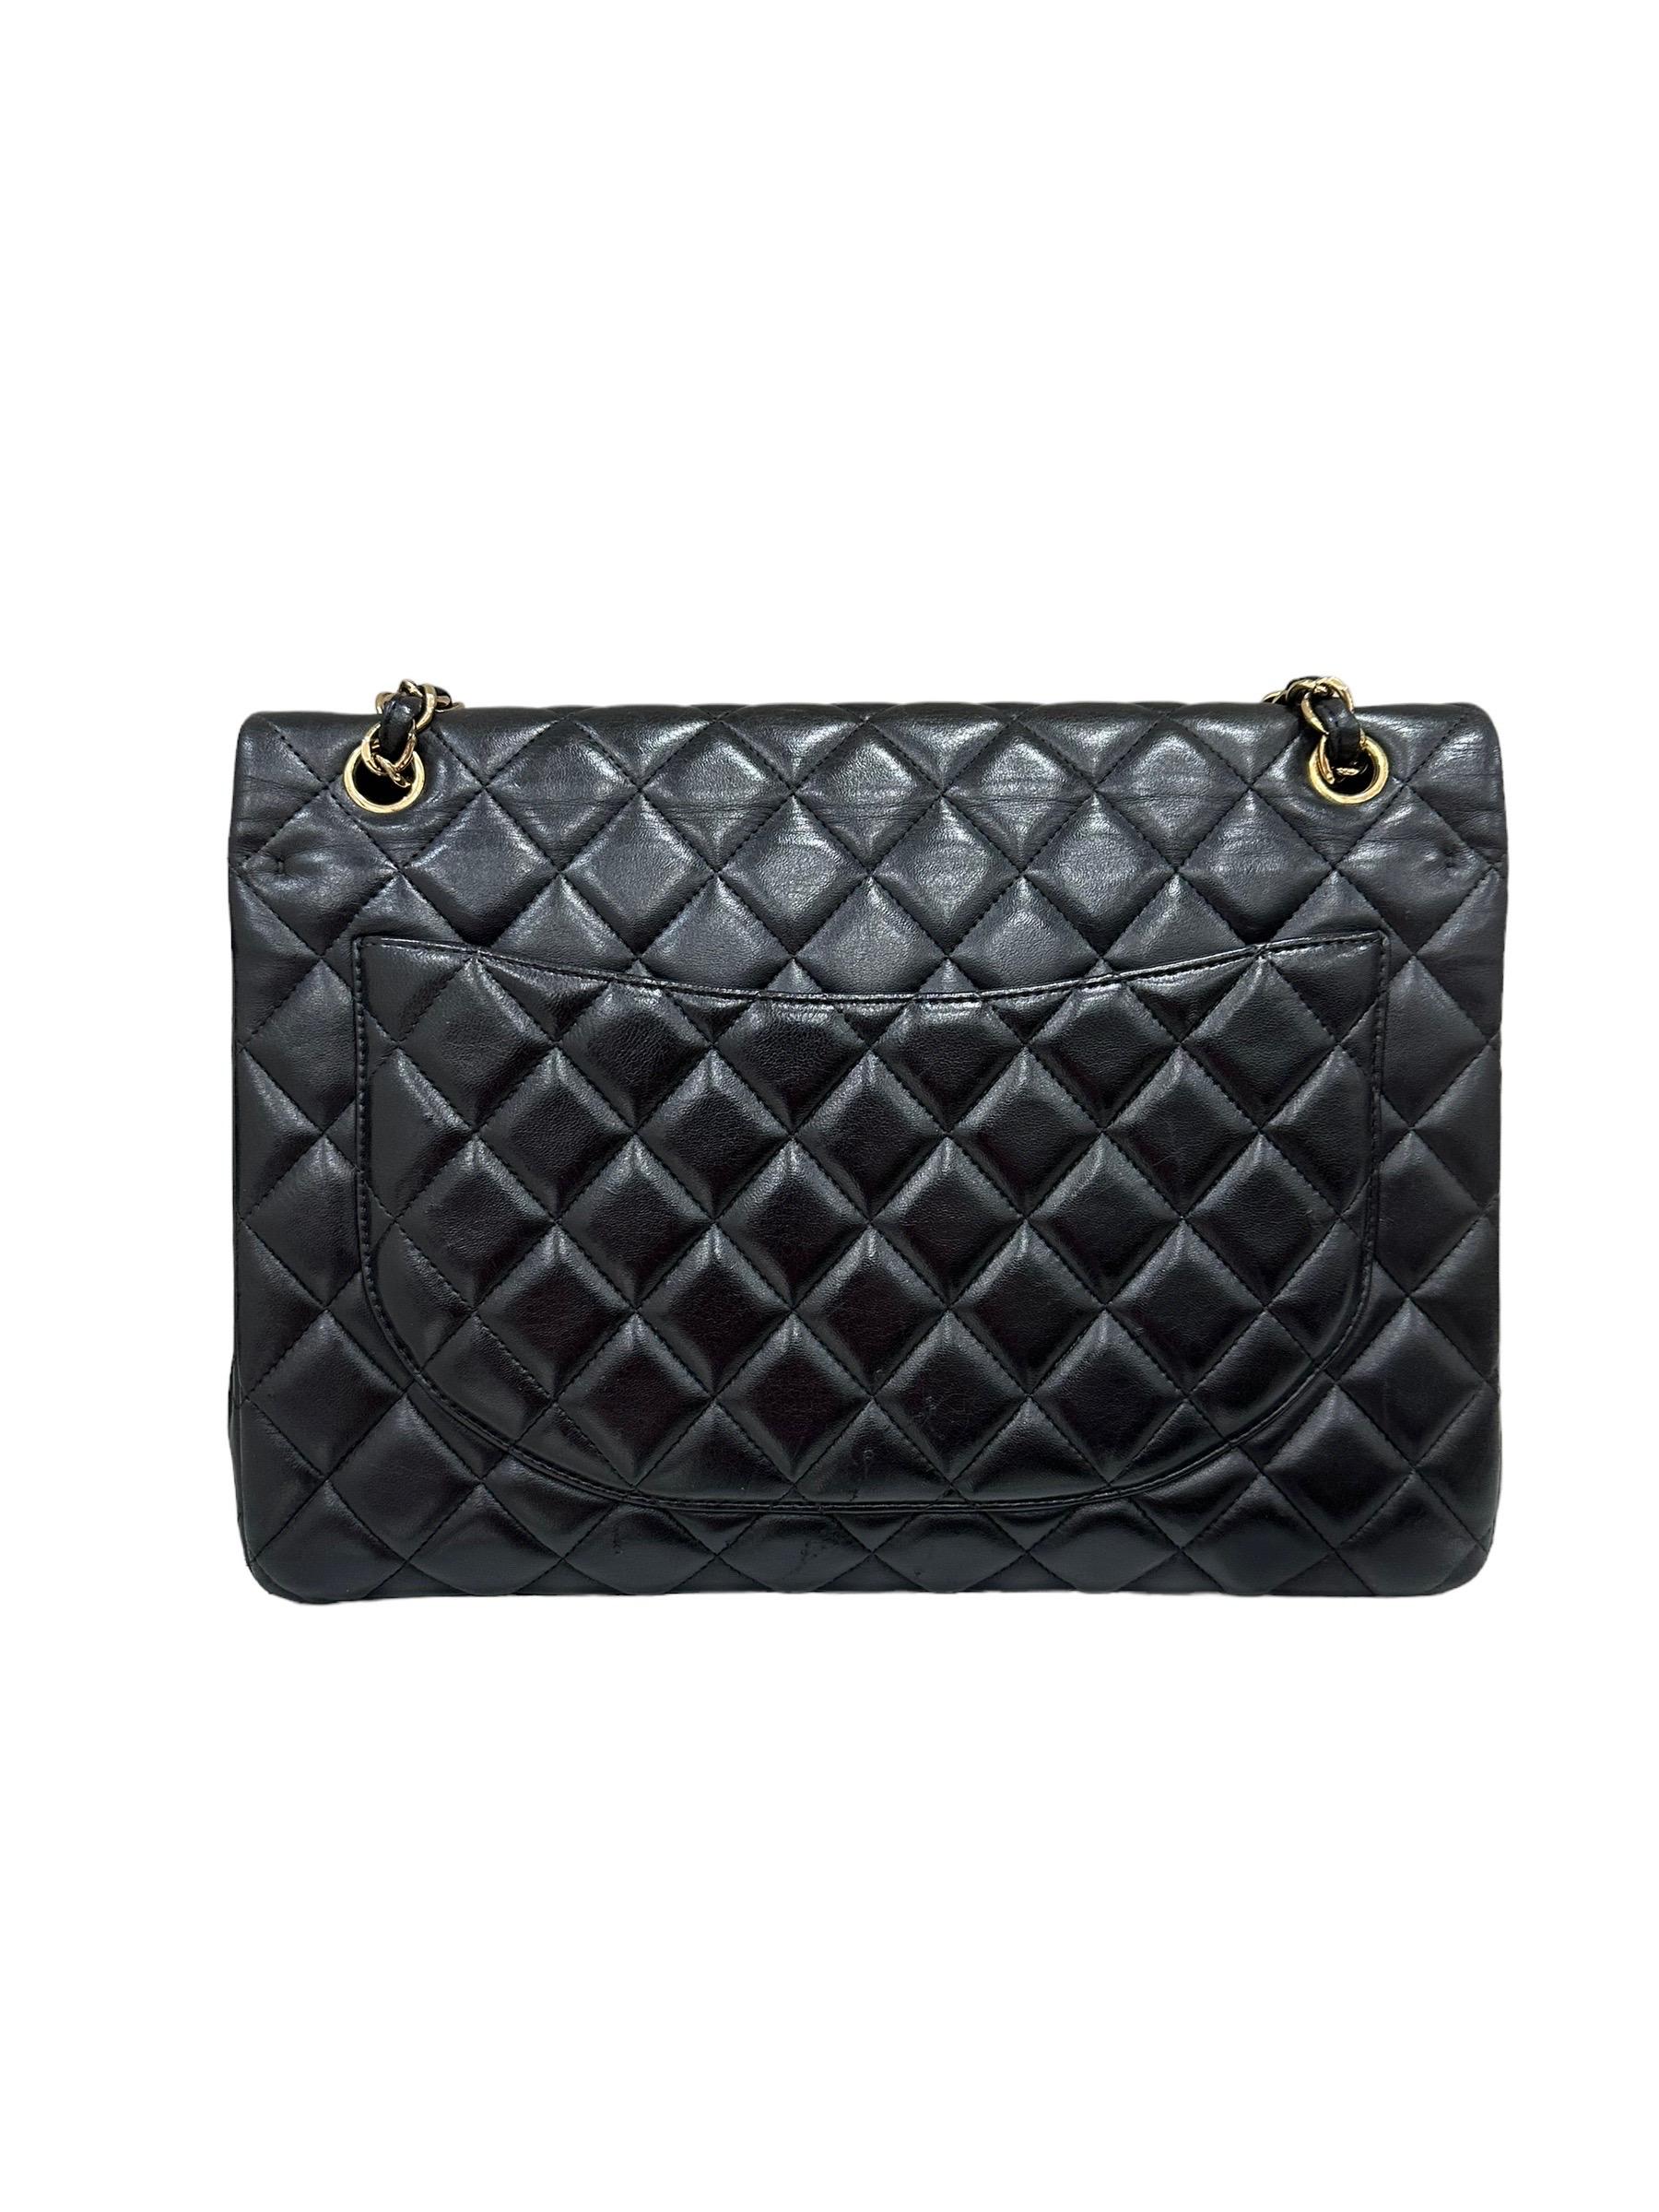 2011 Chanel Timeless Maxi Jumbo Black Leather Top Shoulder Bag For Sale 3